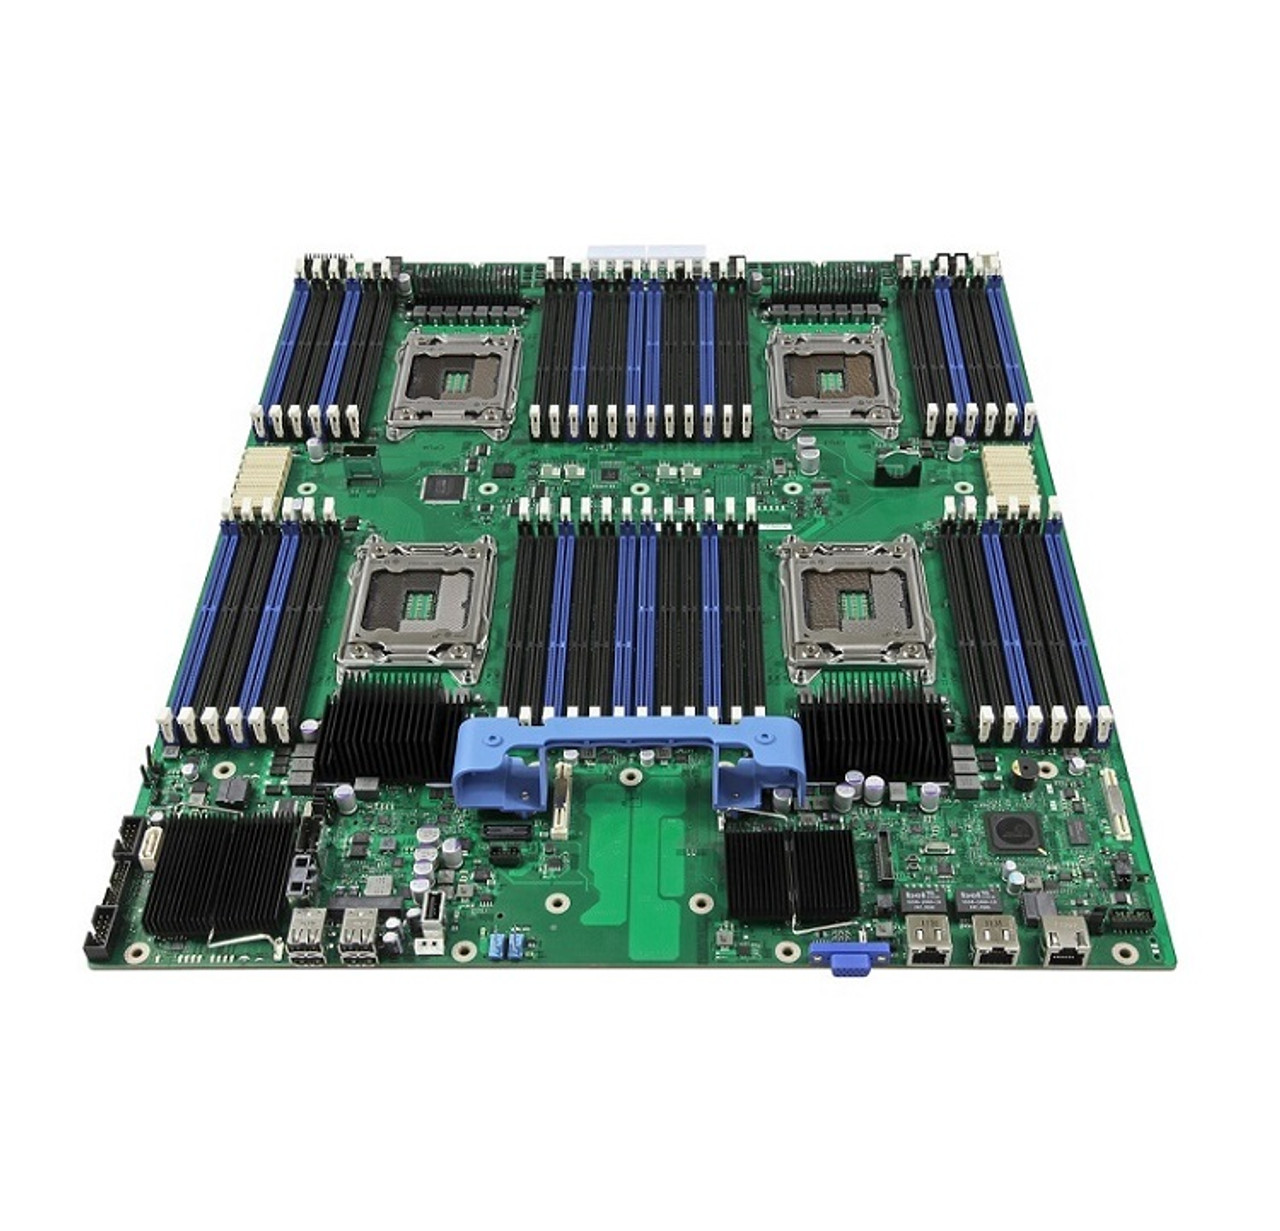 BBS2600JFF - Intel S2600JFF Server Motherboard C600-A Chipset Socket R LGA-2011 2x Processor Support (Refurbished)